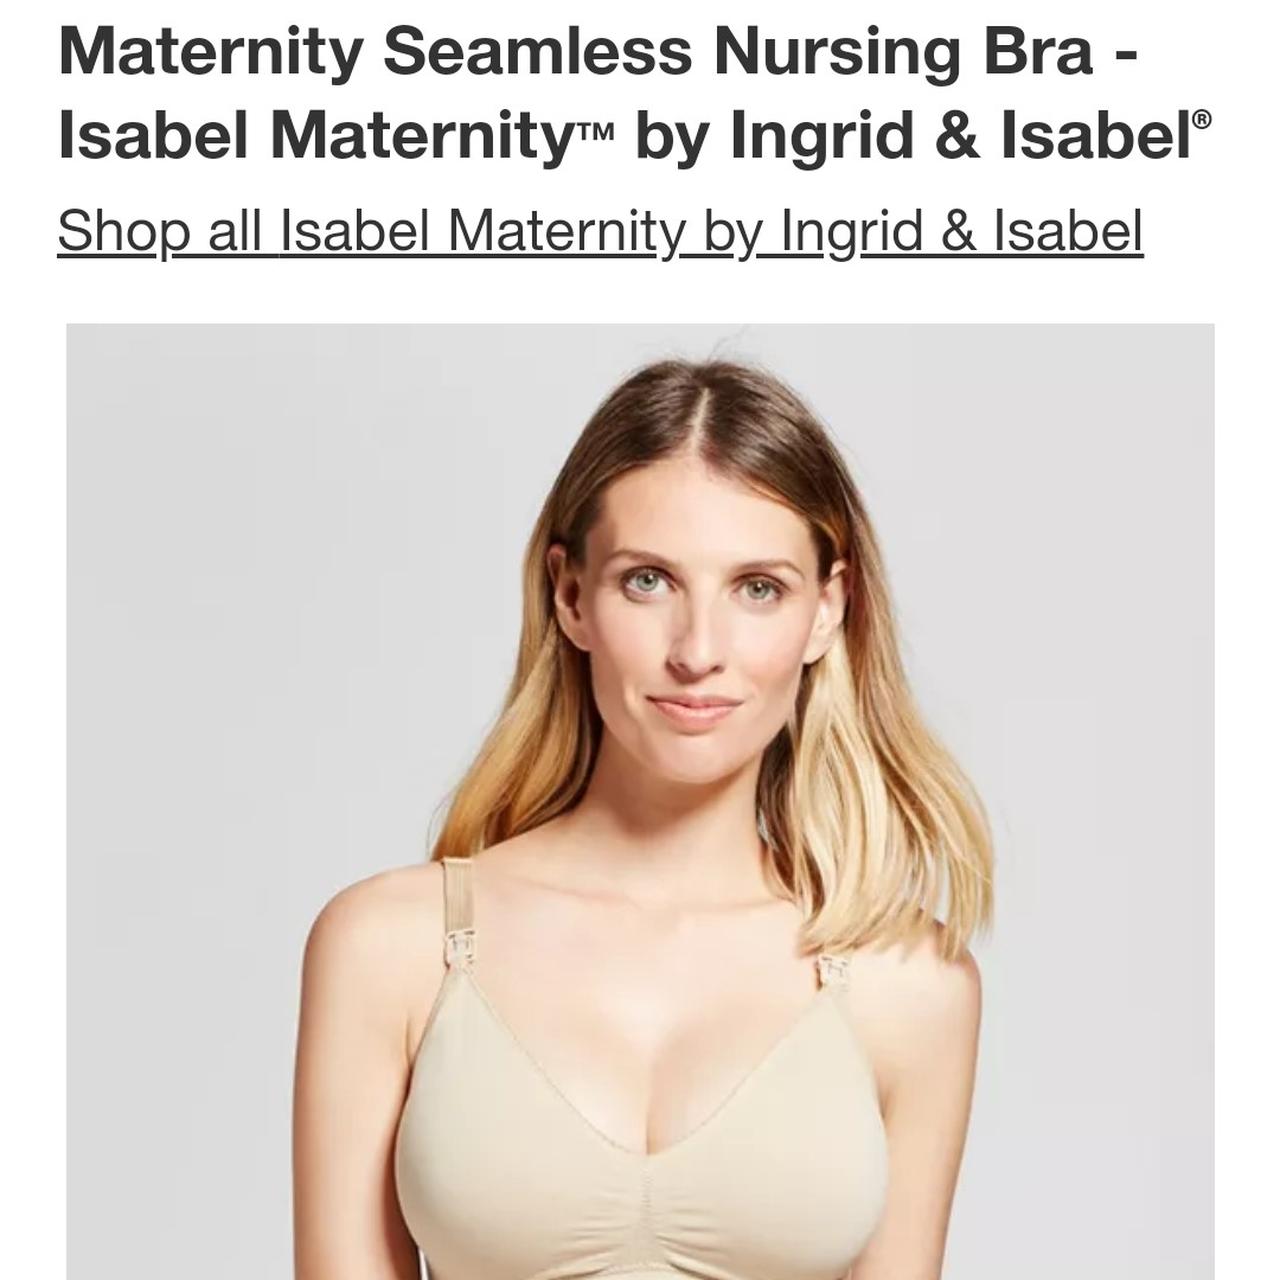 Black Maternity Seamless Nursing Bra - Isabel Maternity by Ingrid